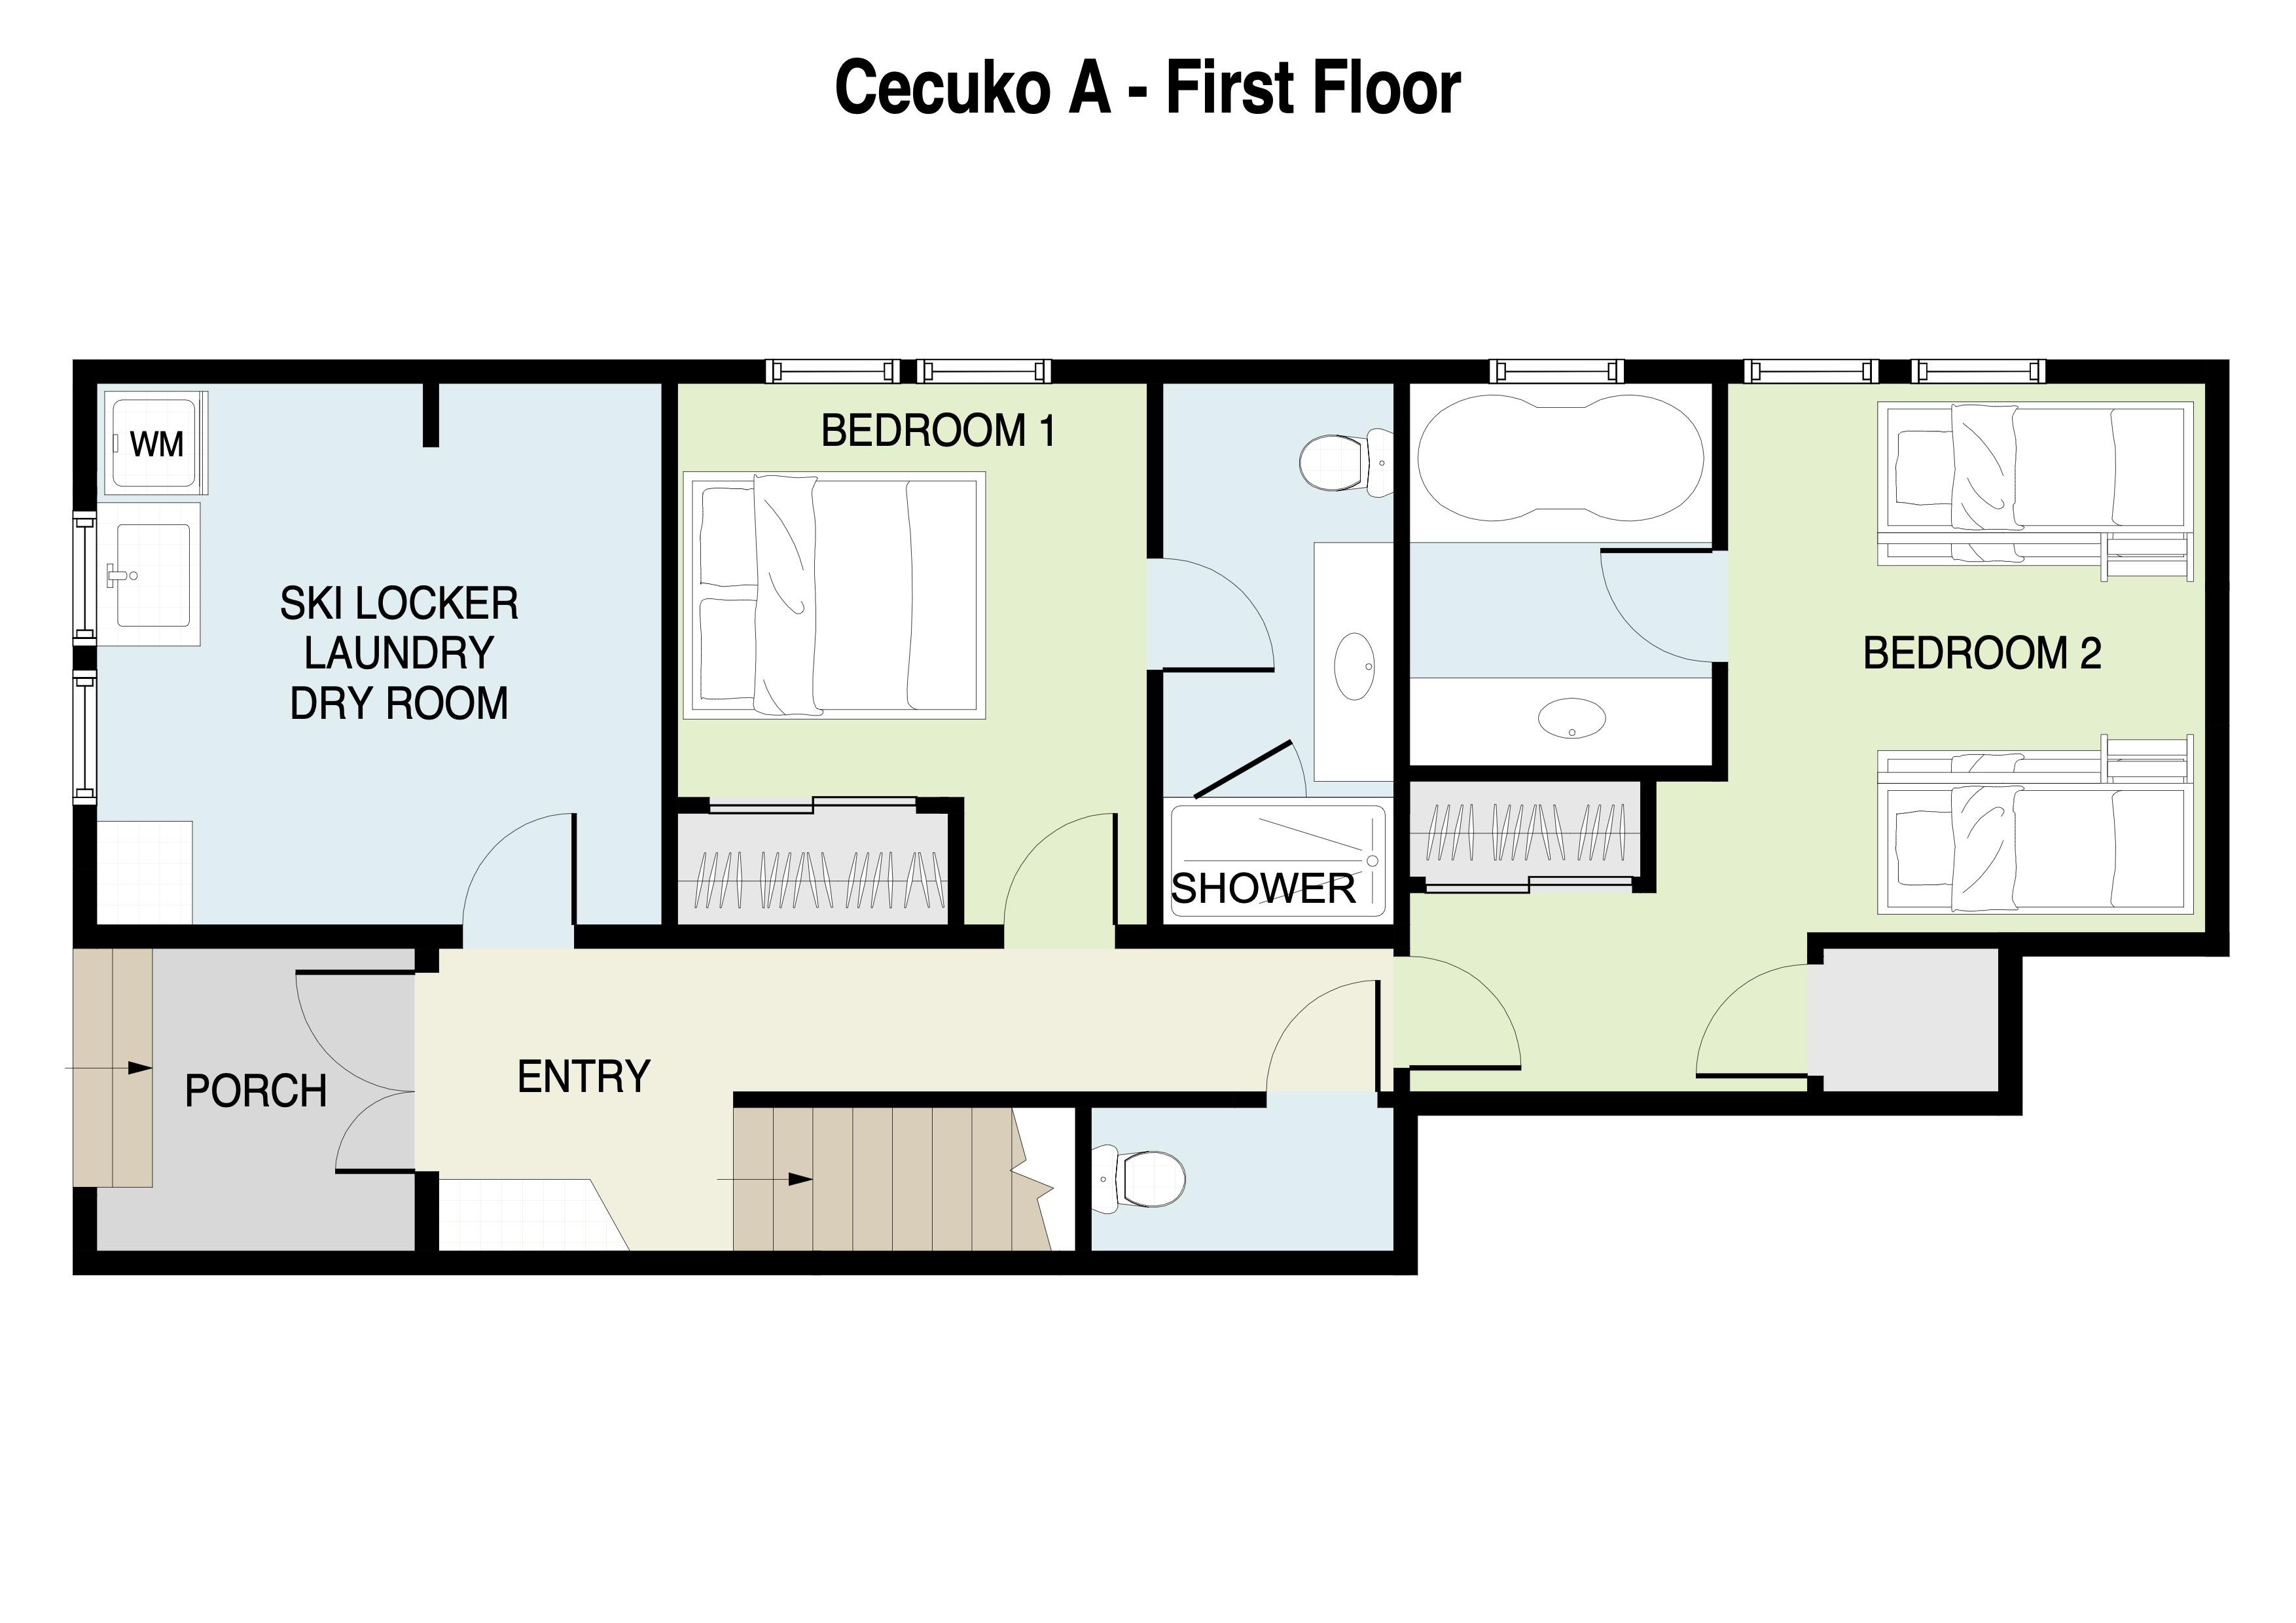 Cecuko A 1st Floor Plans